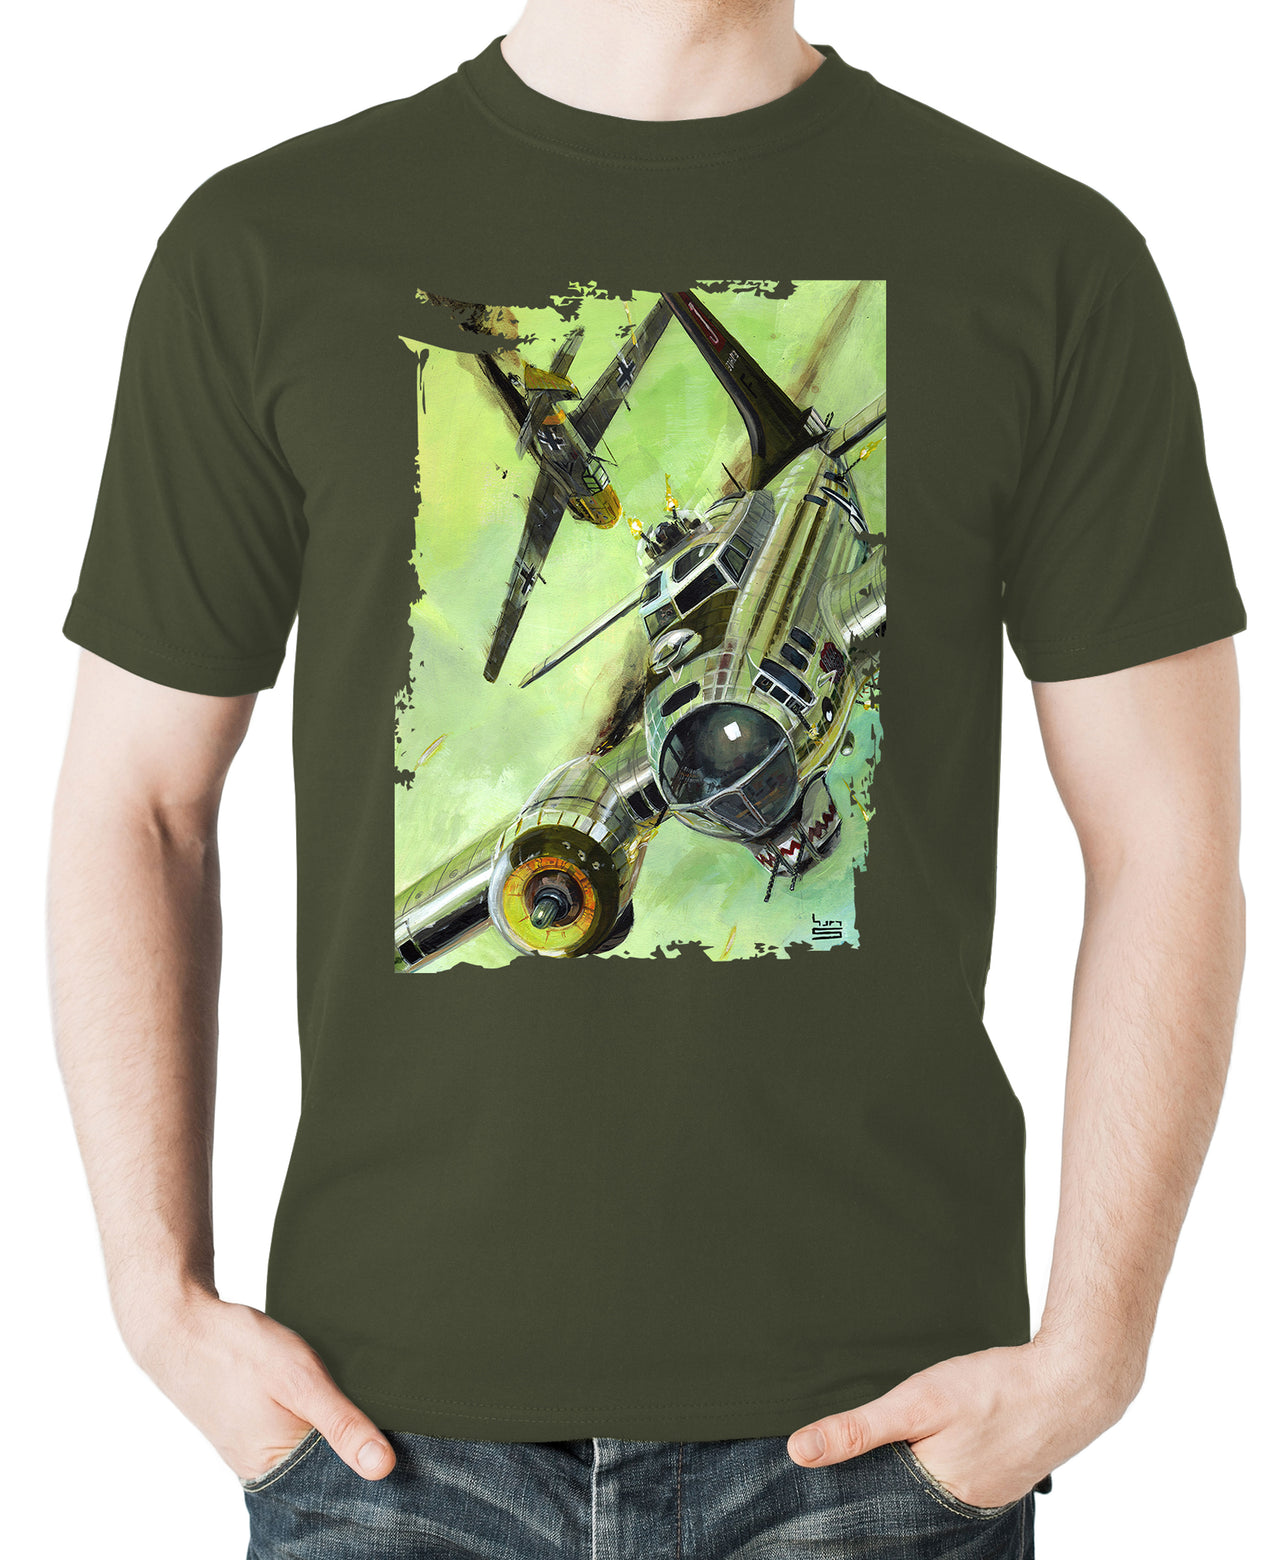 B-17 - 'One more closer to home' - T-shirt